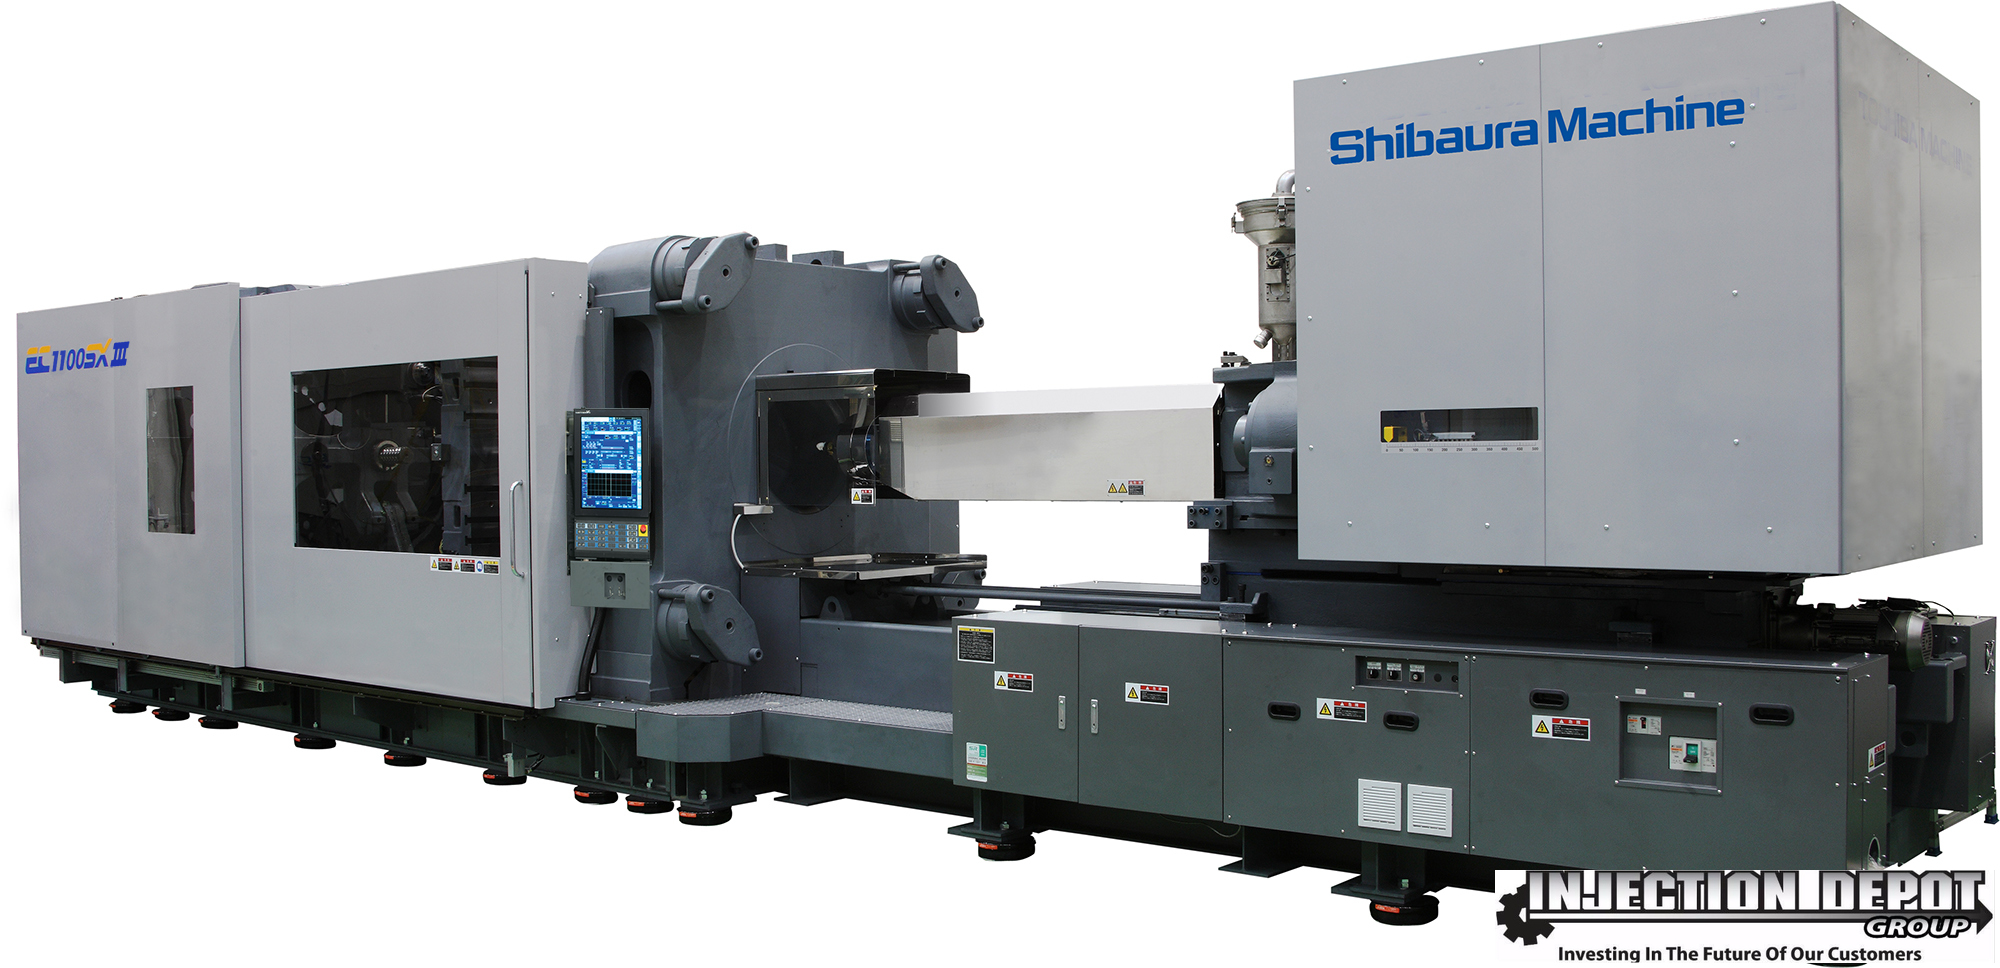 SHIBAURA MACHINE EC1100SXIIIV70-i78 AT Horizontal Injection Moulding Machines | INJECTION DEPOT GROUP